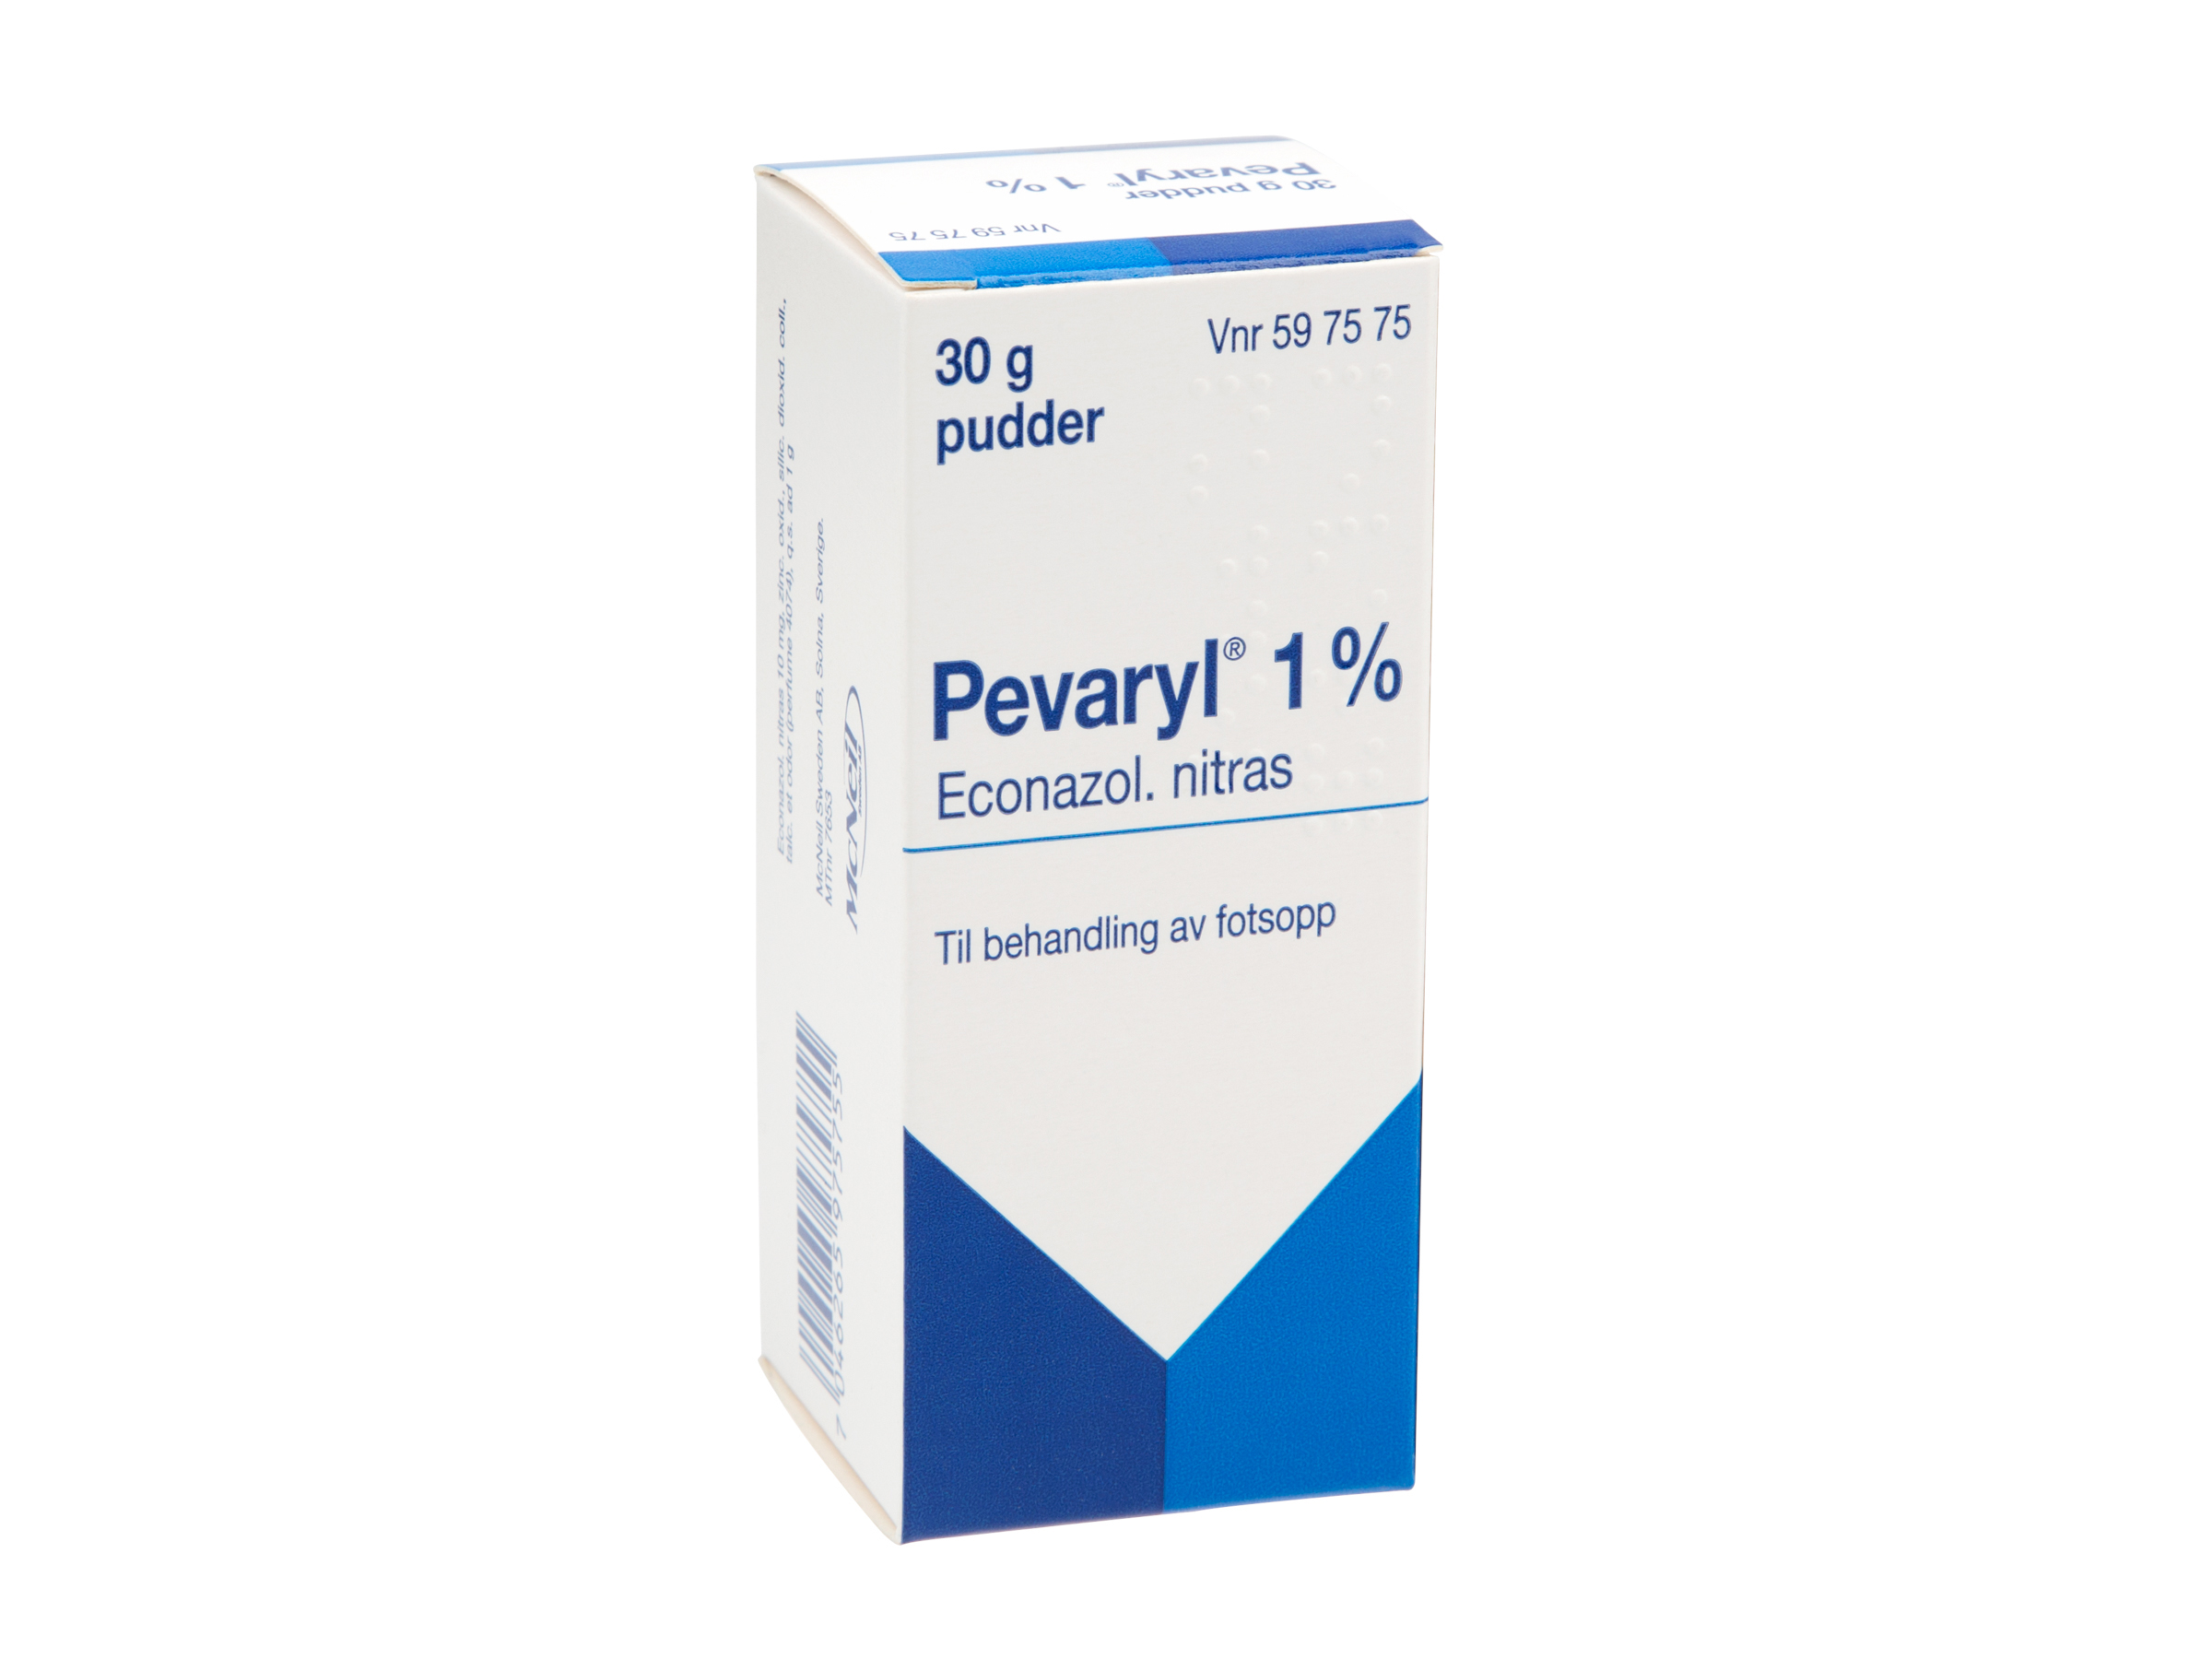 Pevaryl Pudder 1 %, 30 gram